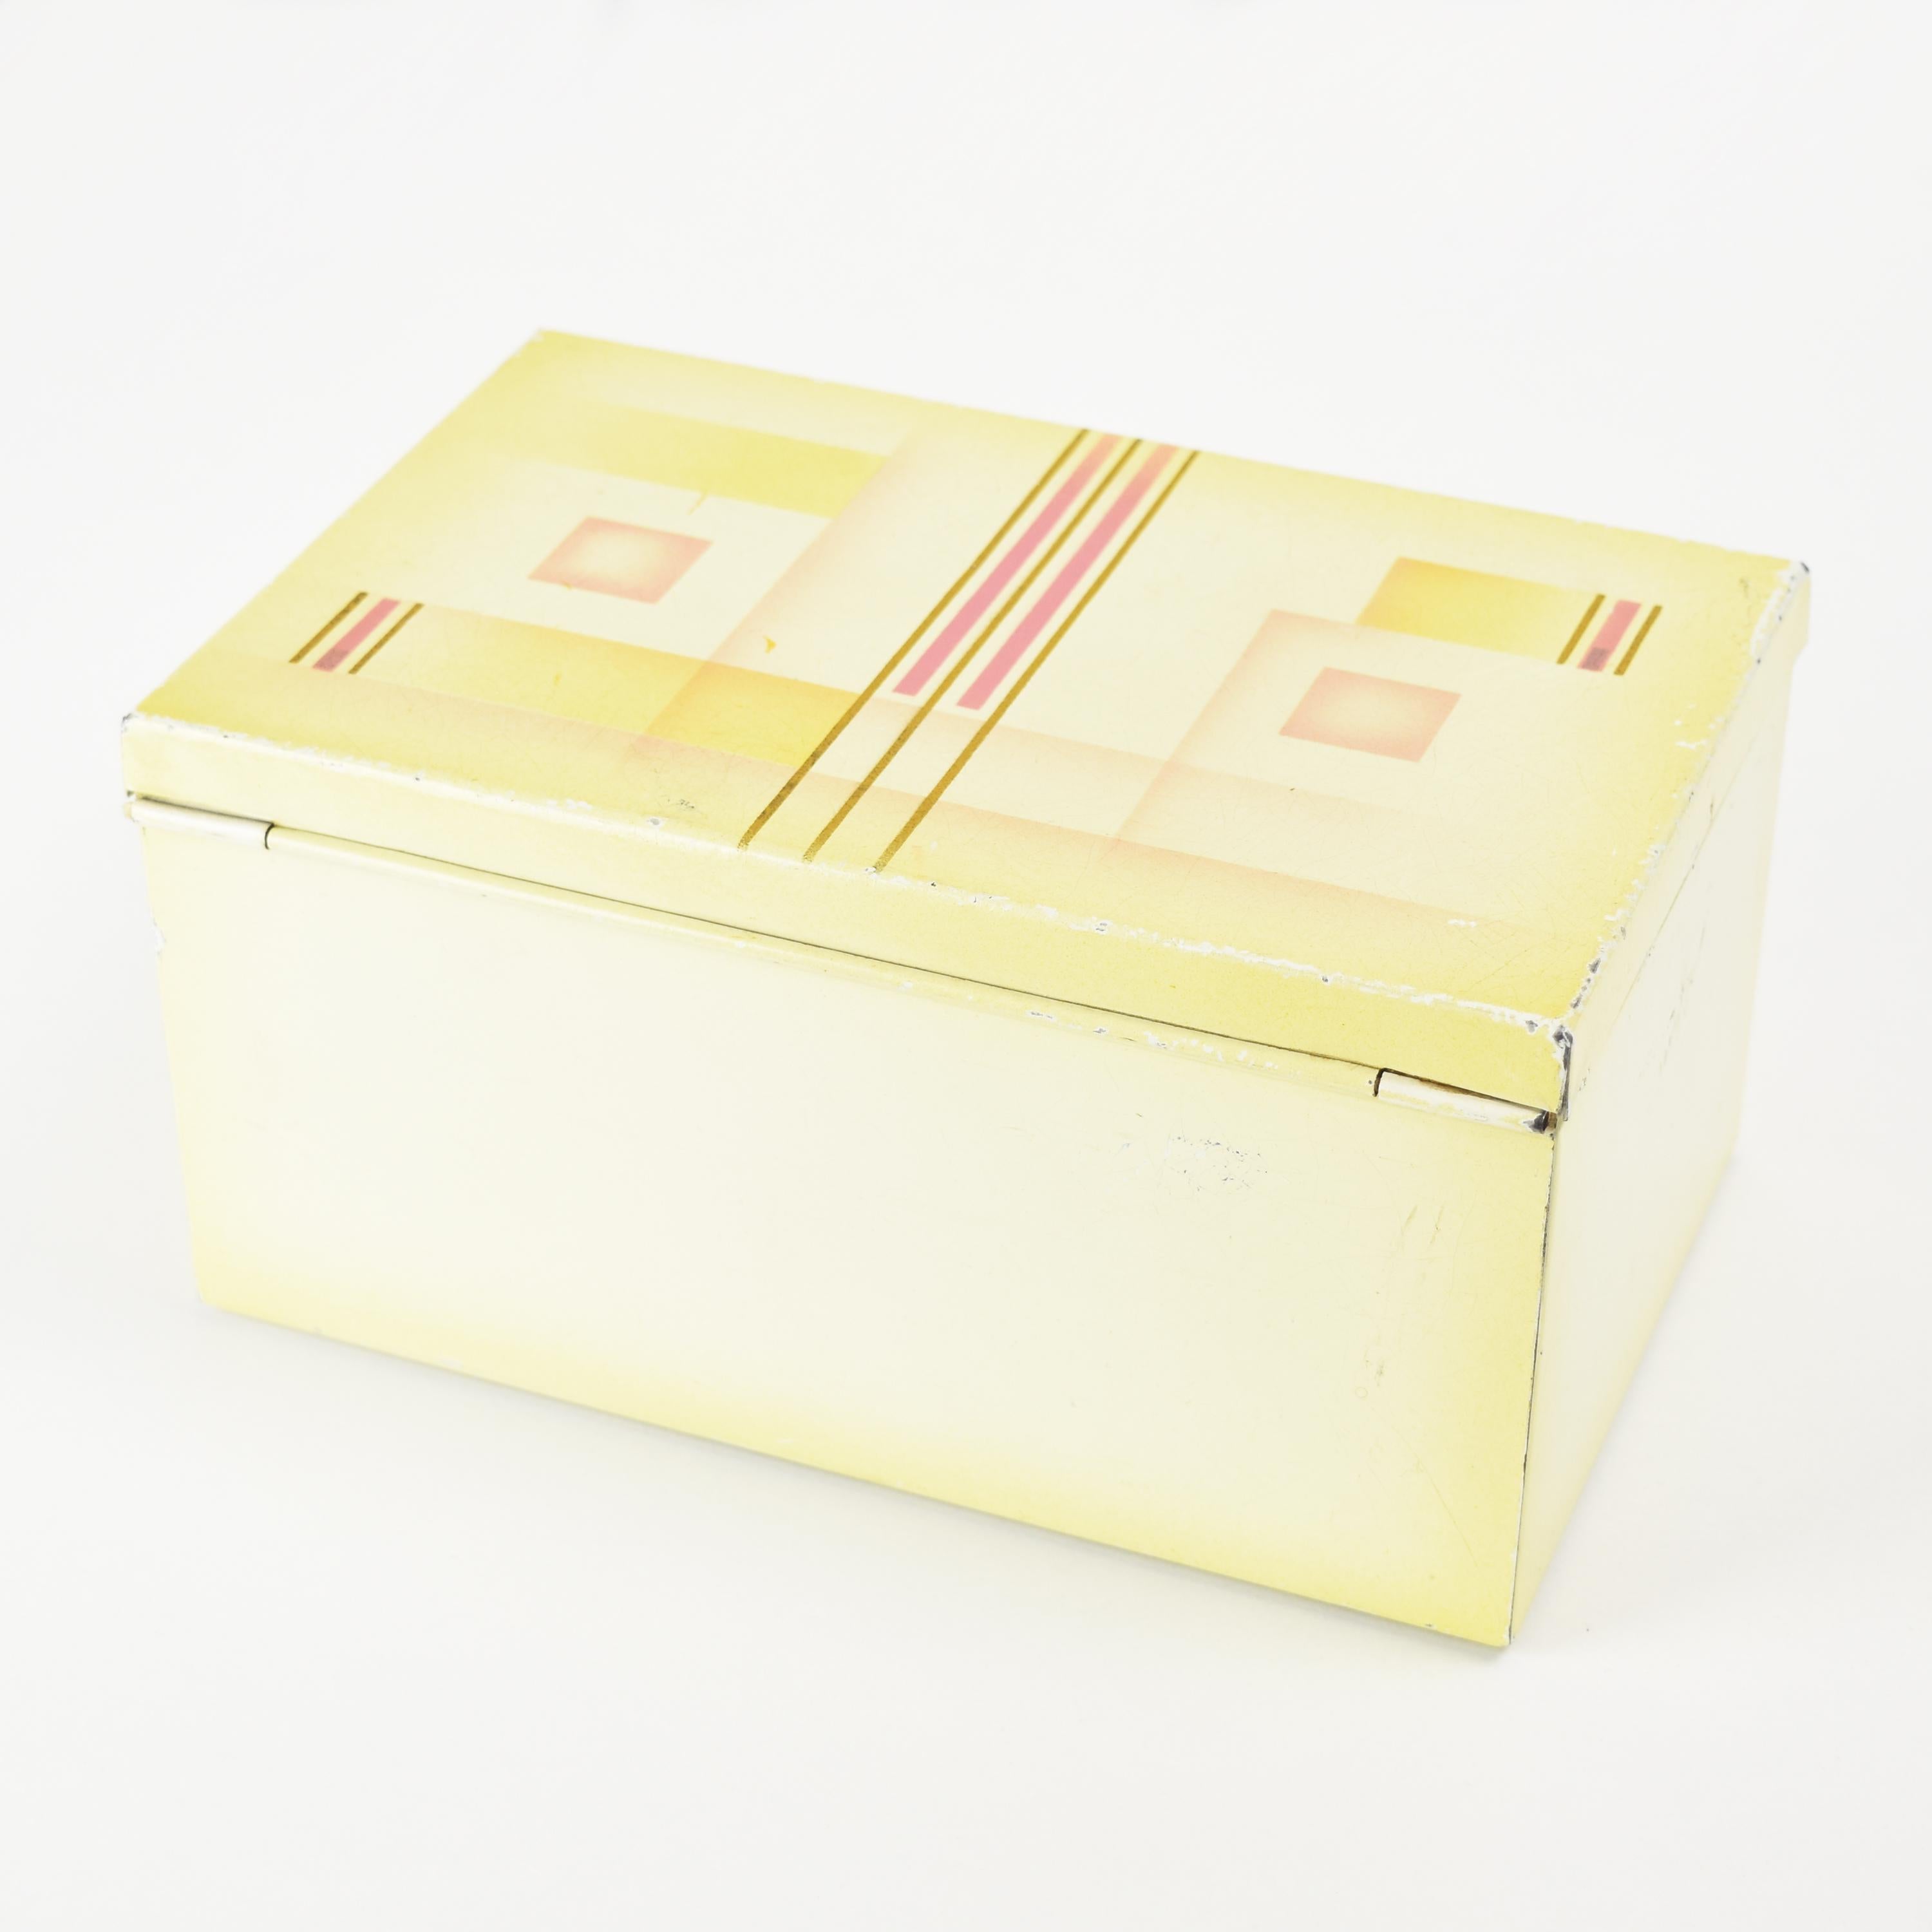 Early 20th Century Art Deco Modernist Spritzdekor Metal Tin Box Container Marianne Brandt Bauhaus For Sale